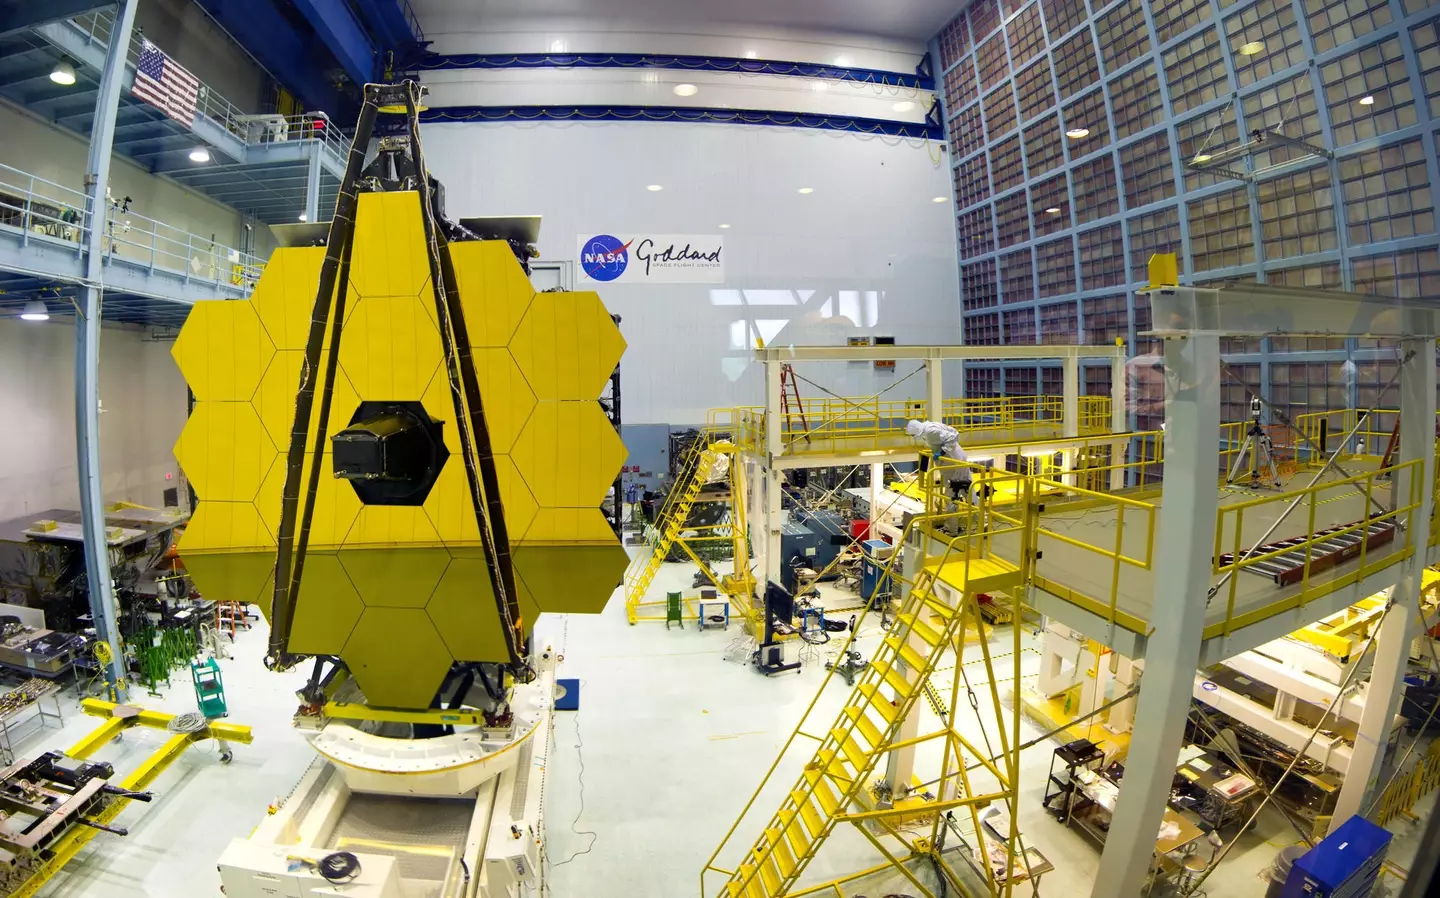 The James Webb Space Telescope has cost $10 billion.